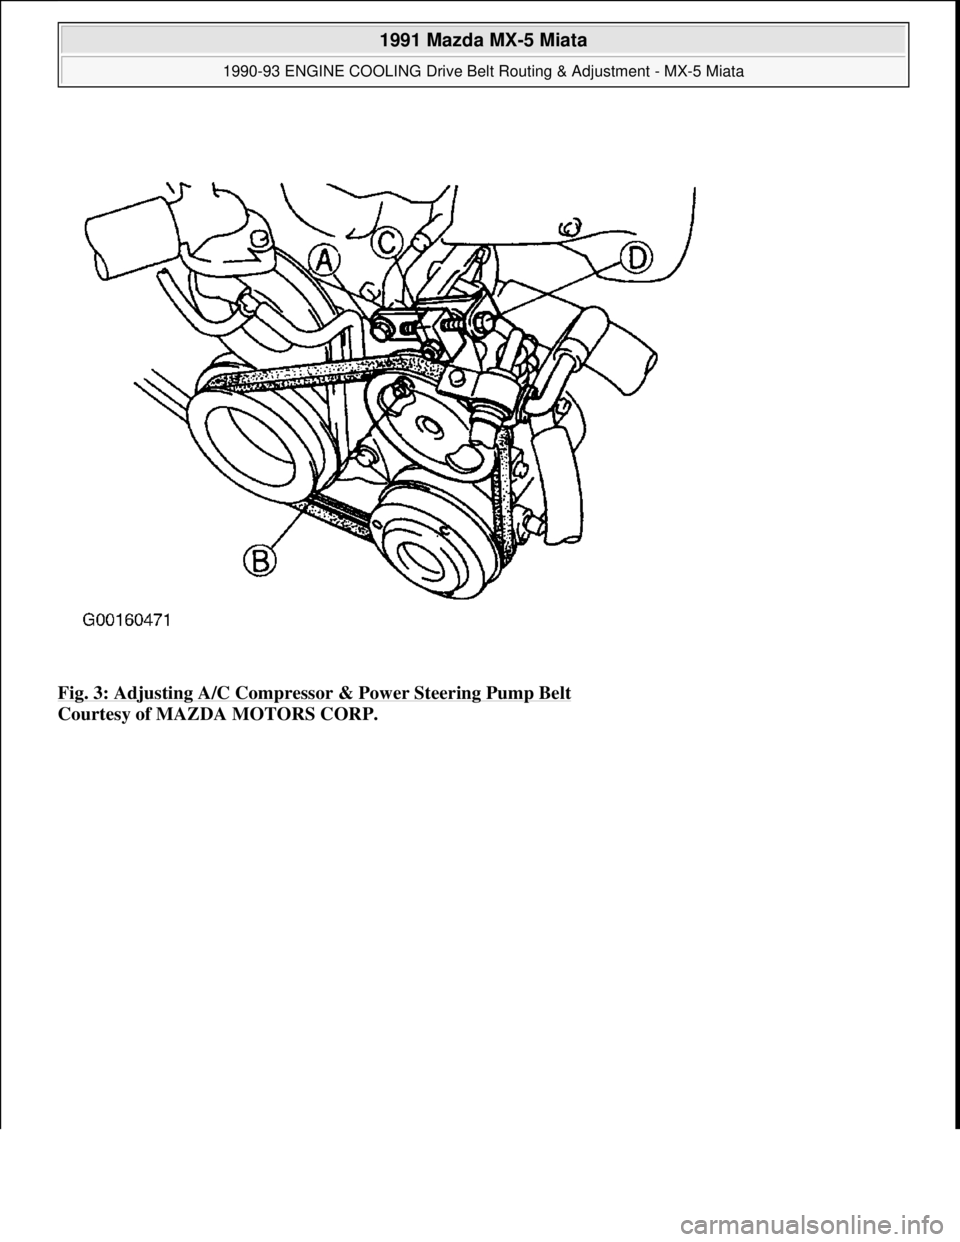 MAZDA MIATA 1991  Factory Service Manual Fig. 3: Adjusting A/C Compressor & Power Steering Pump Belt 
Courtesy of MAZDA MOTORS CORP. 
 
1991 Mazda MX-5 Miata 
1990-93 ENGINE COOLING Drive Belt Routing & Adjustment - MX-5 Miata  
Microsoft  
